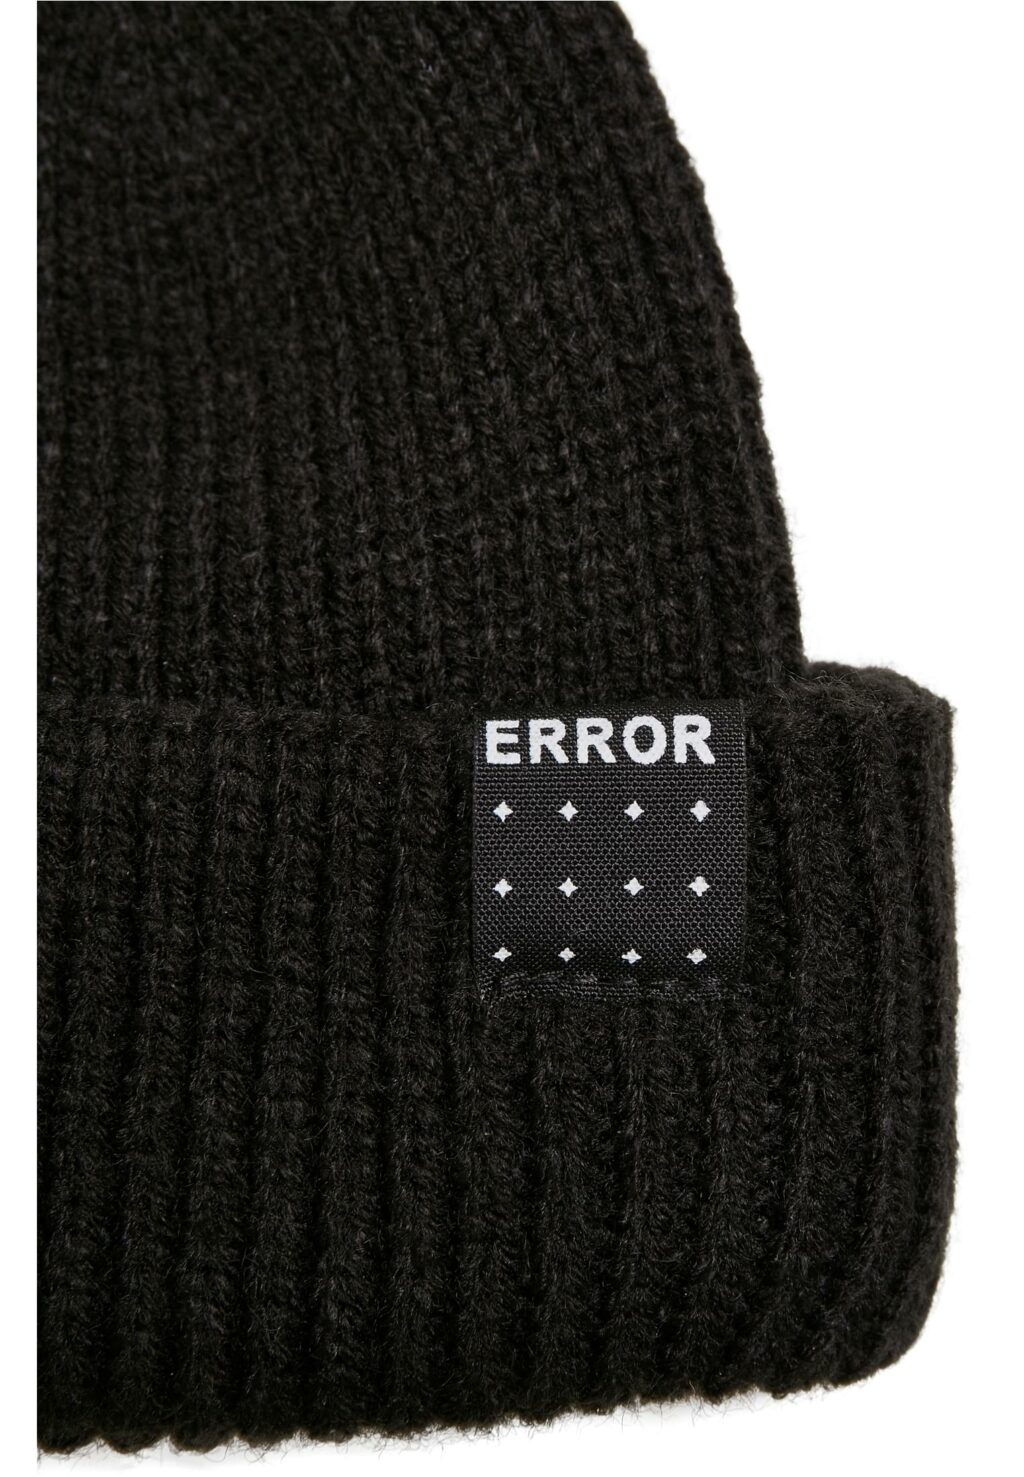 Error Knit Set black one MT2129